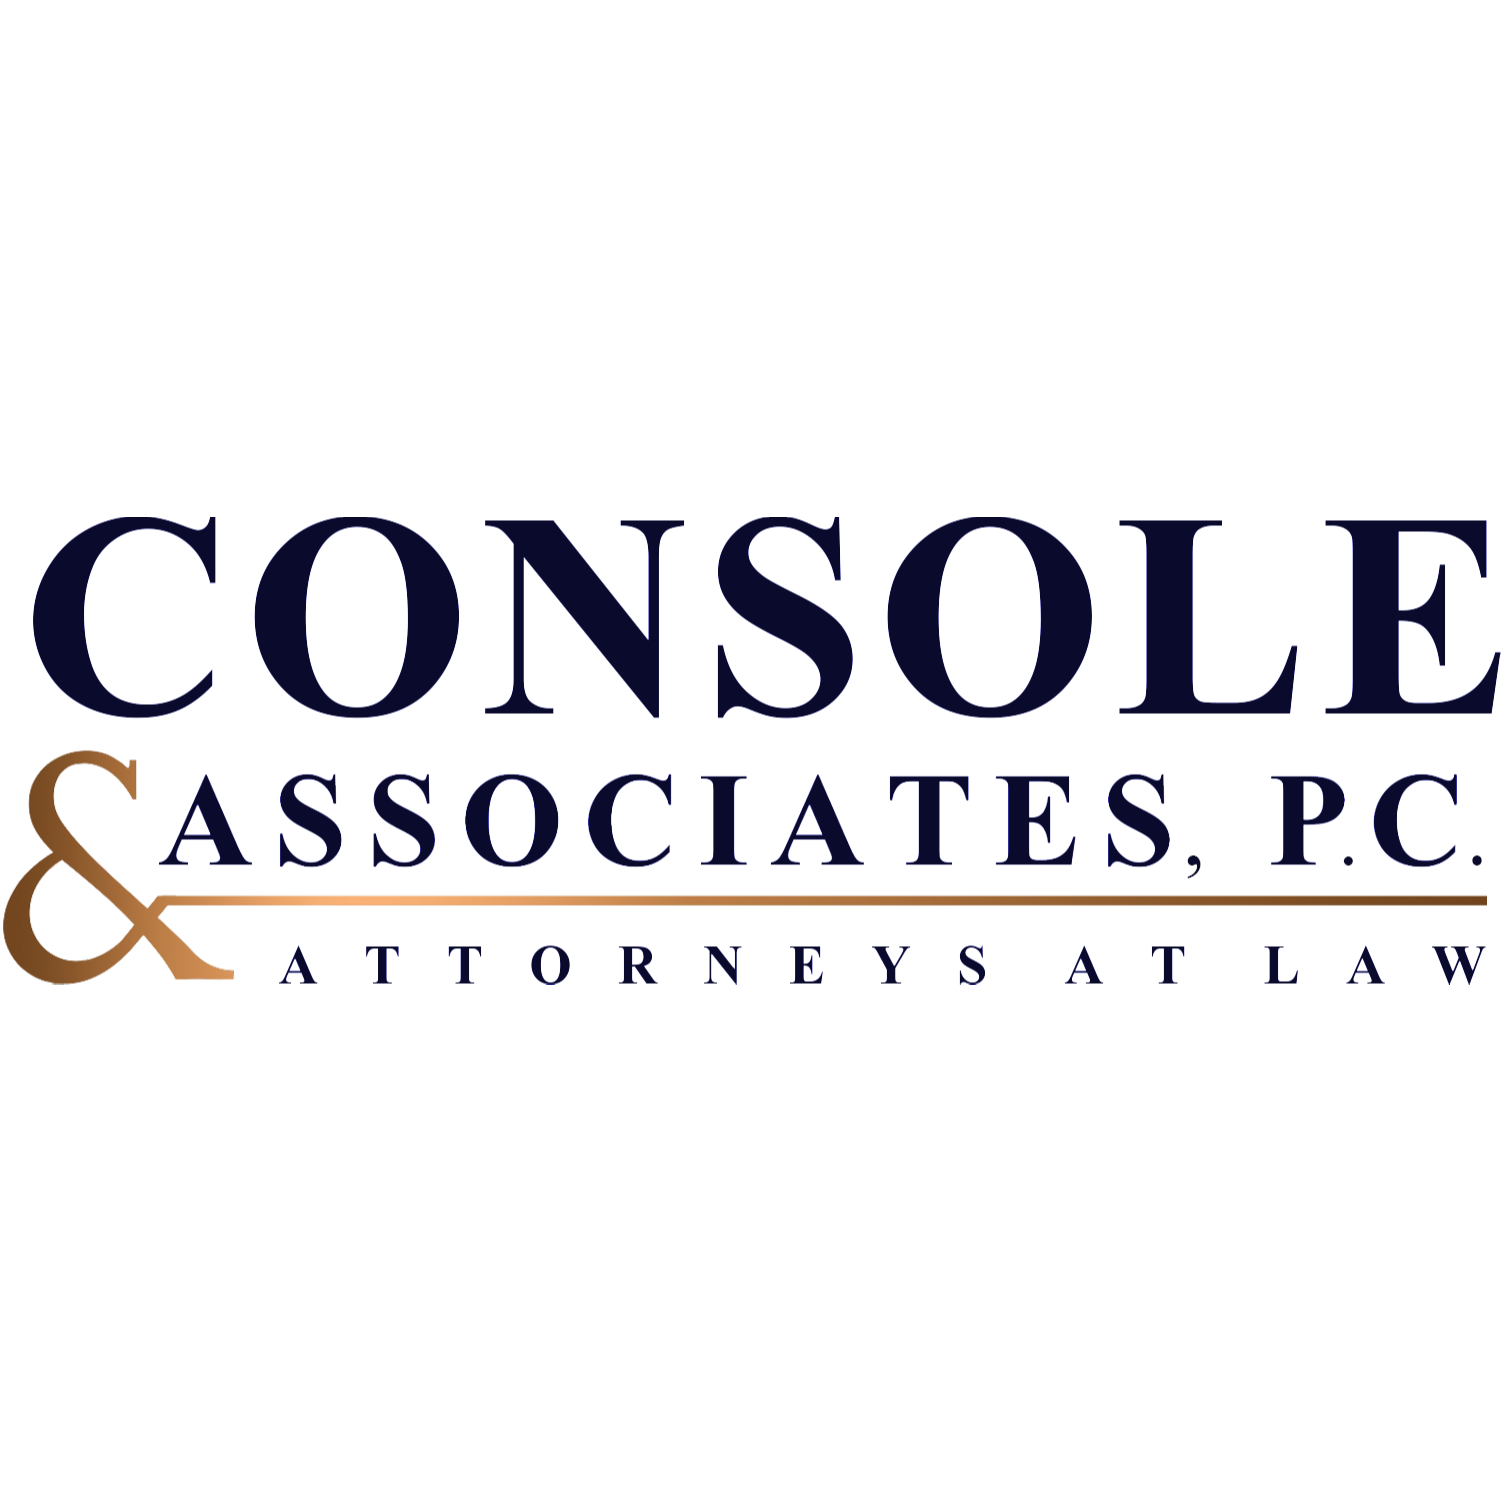 Console and Associates P.C. Logo